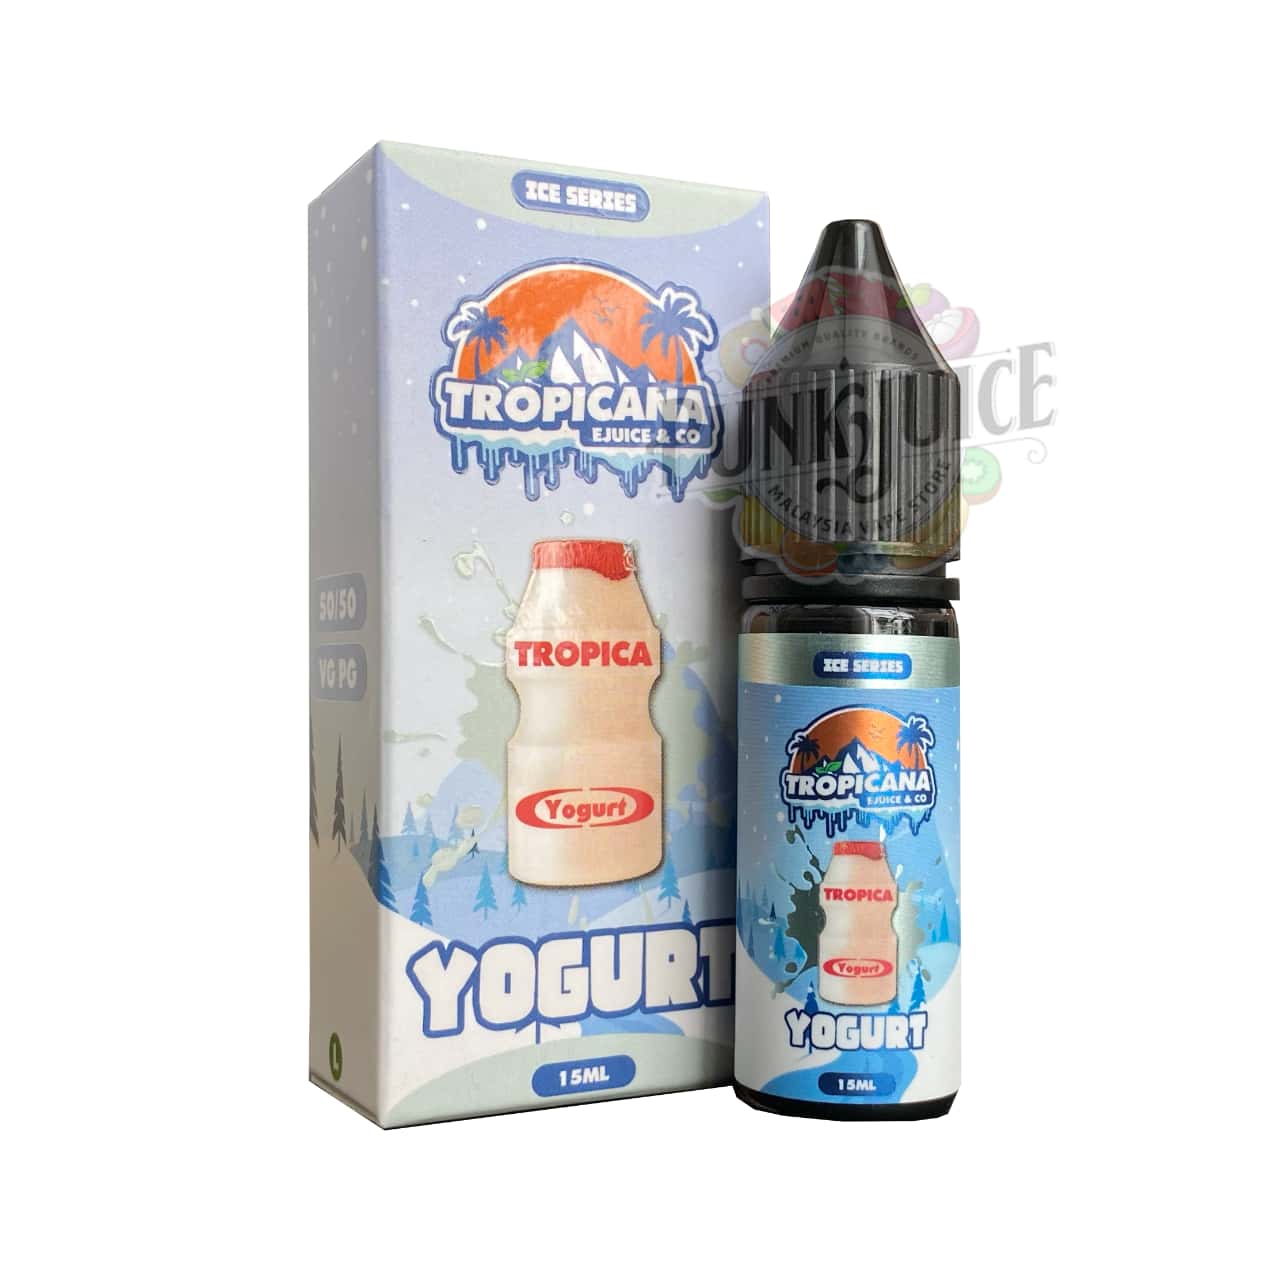 Tropicana - Yogurt Ice - Salt - 15ml